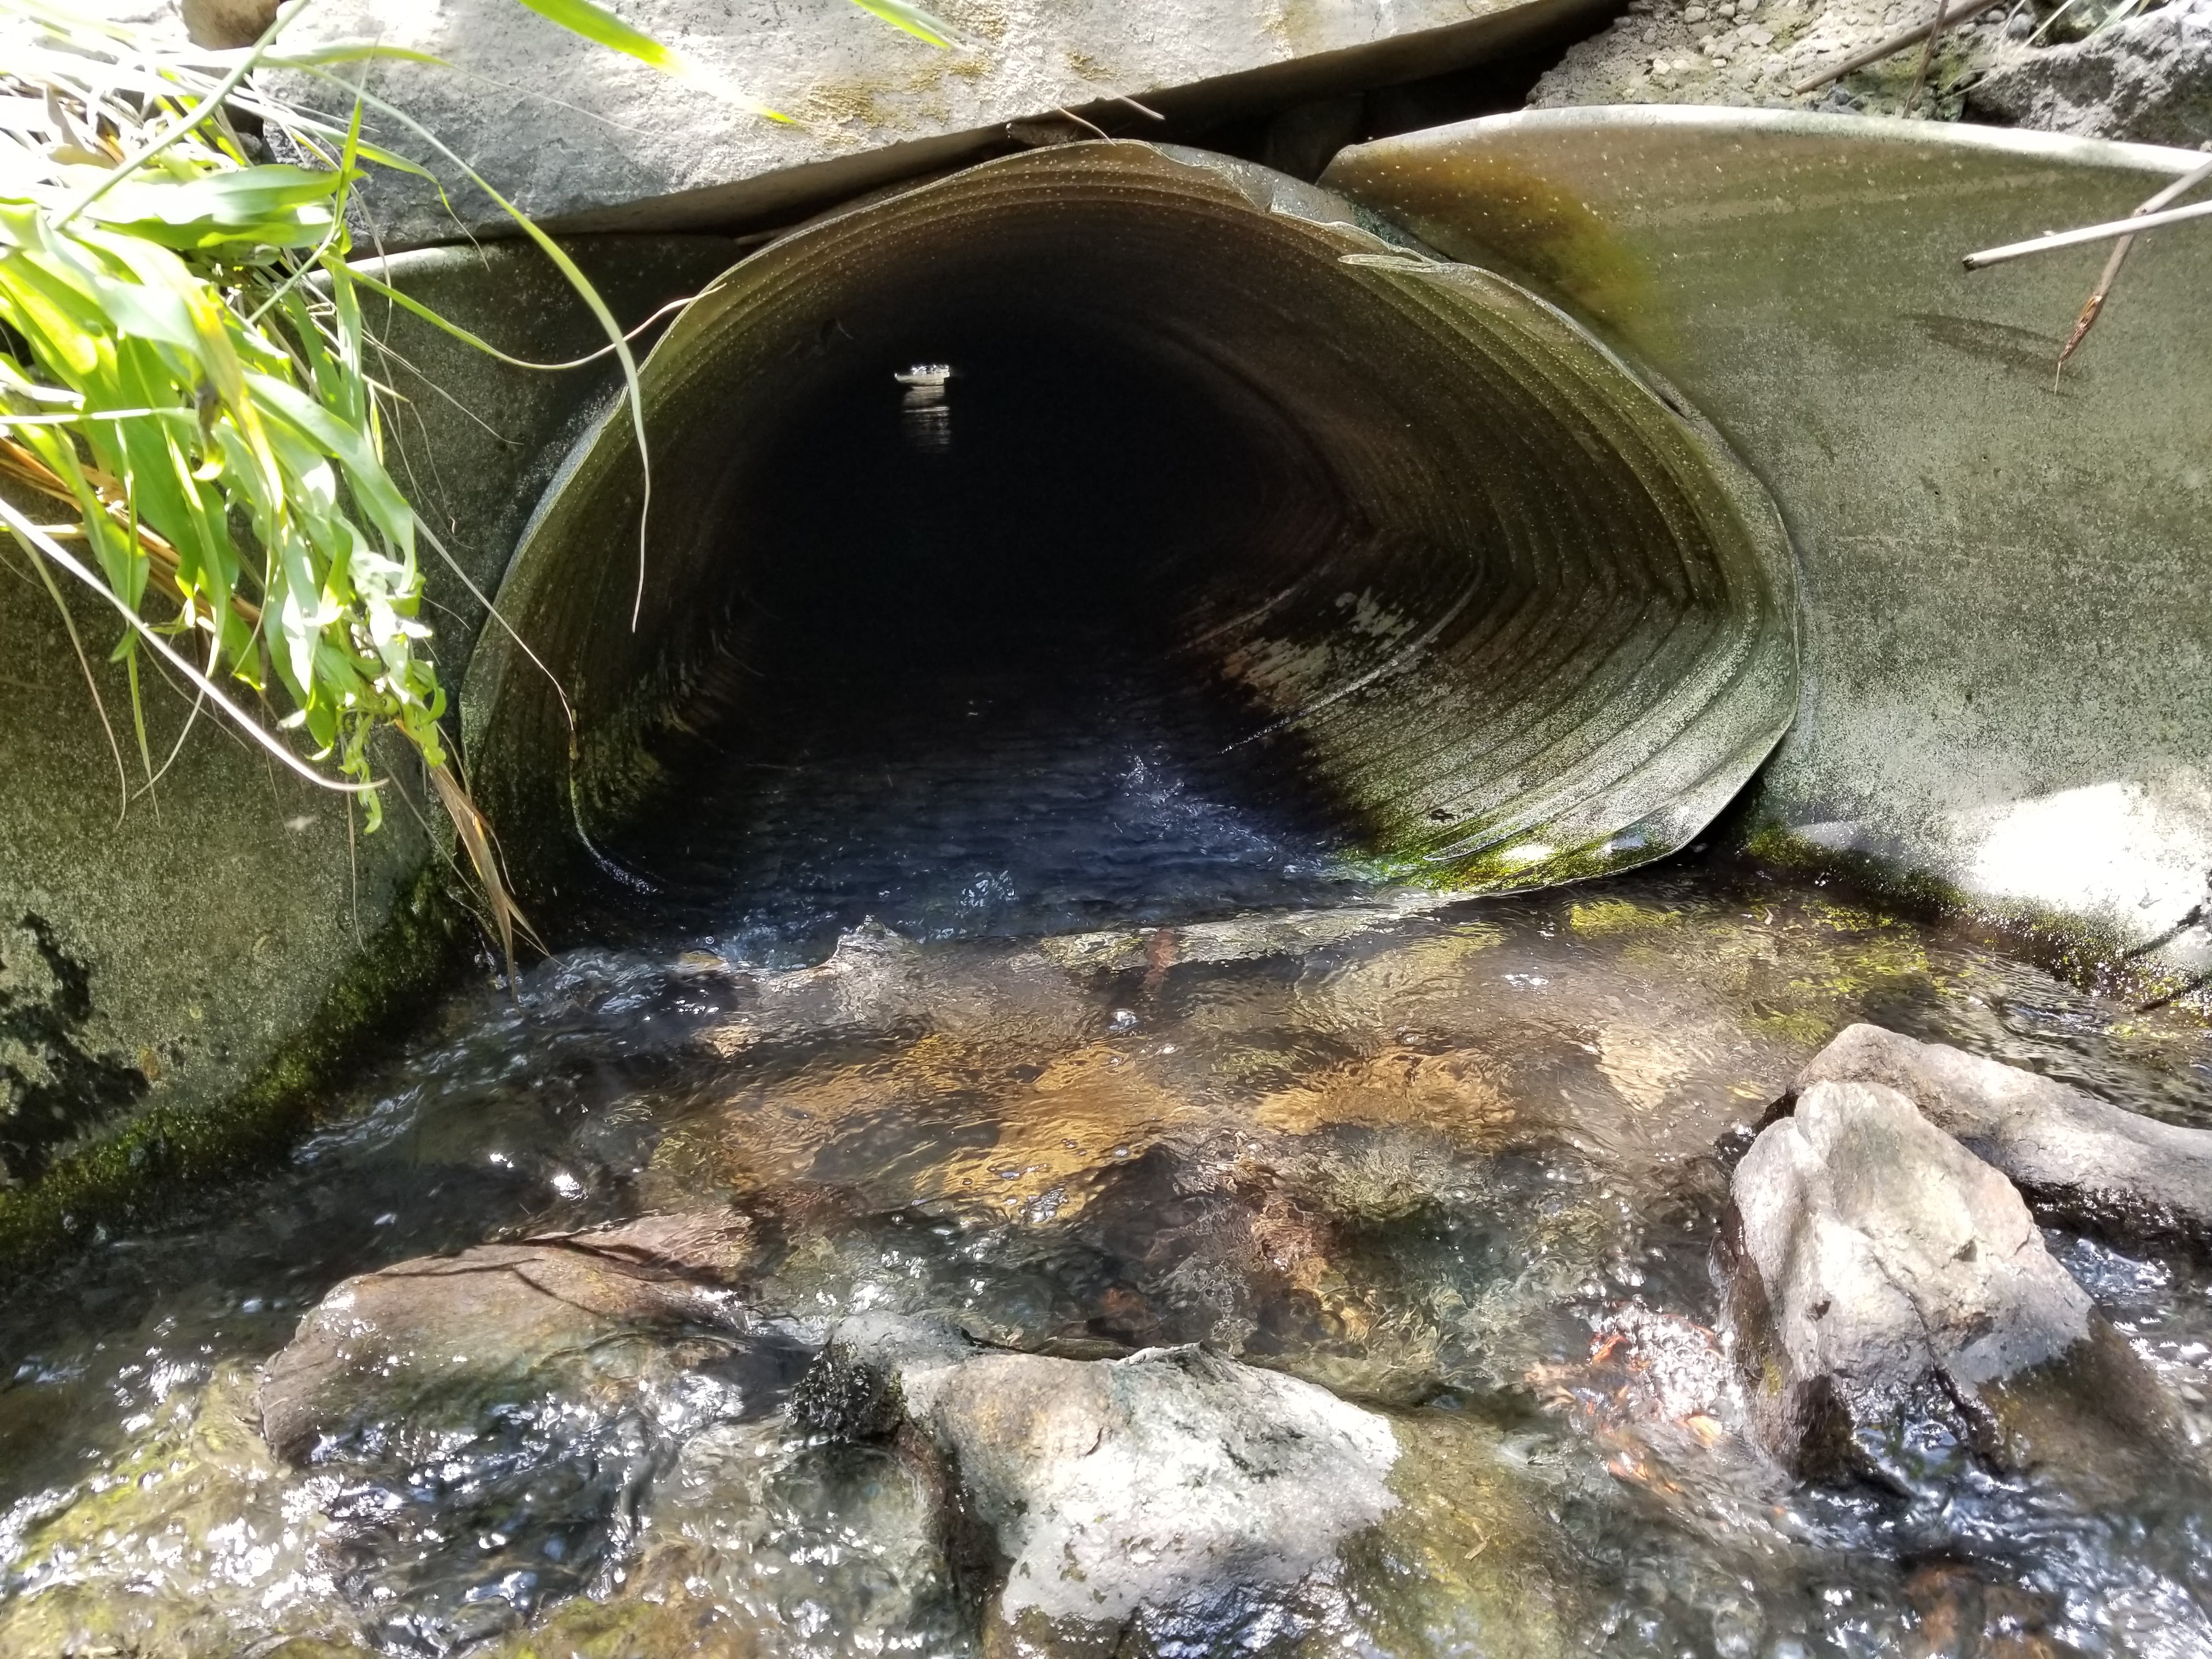 Water flowing through a culvert